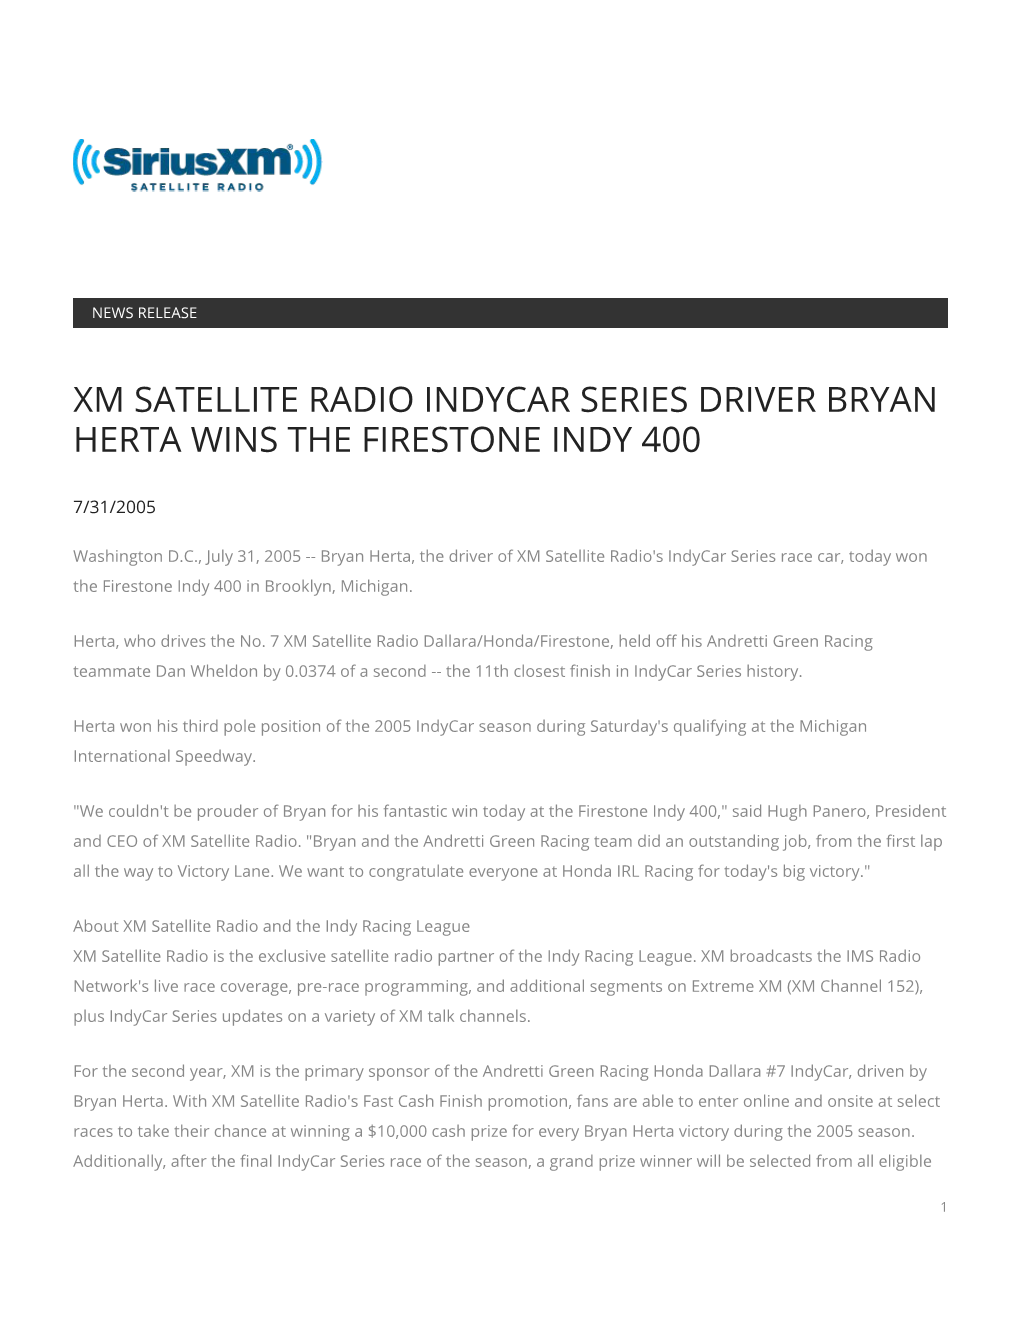 Xm Satellite Radio Indycar Series Driver Bryan Herta Wins the Firestone Indy 400